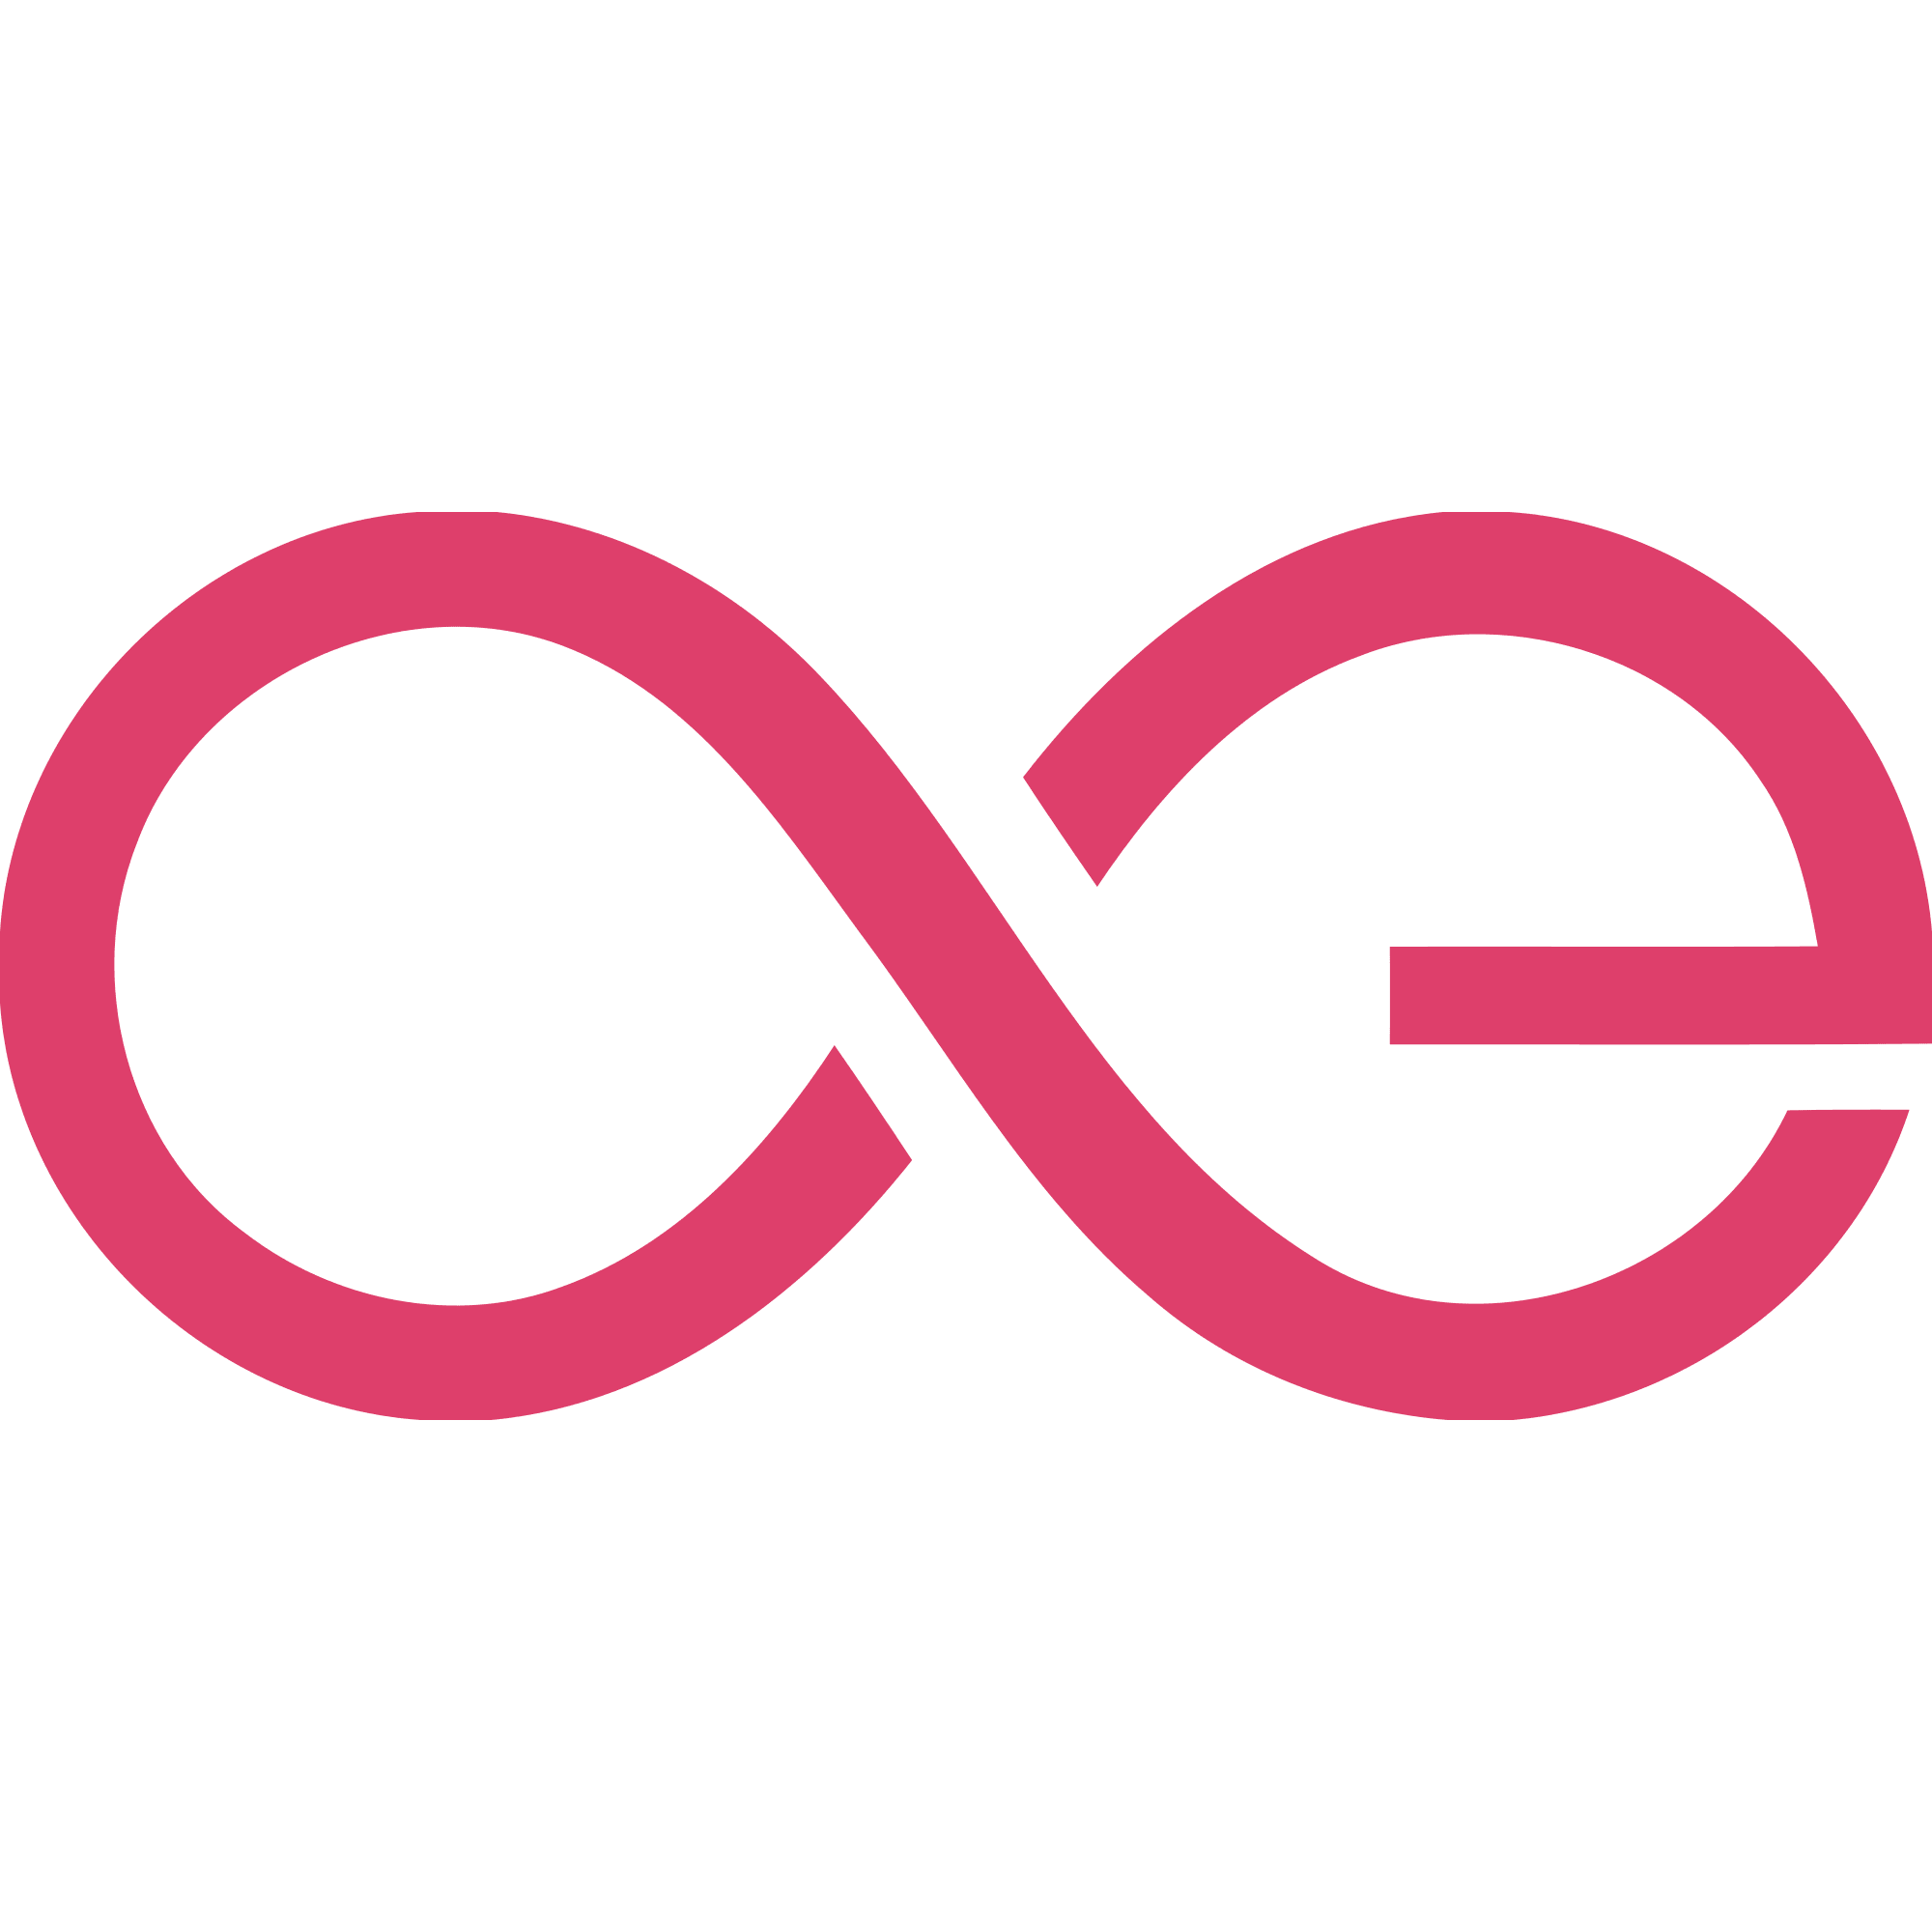 Aeternity logo in png format